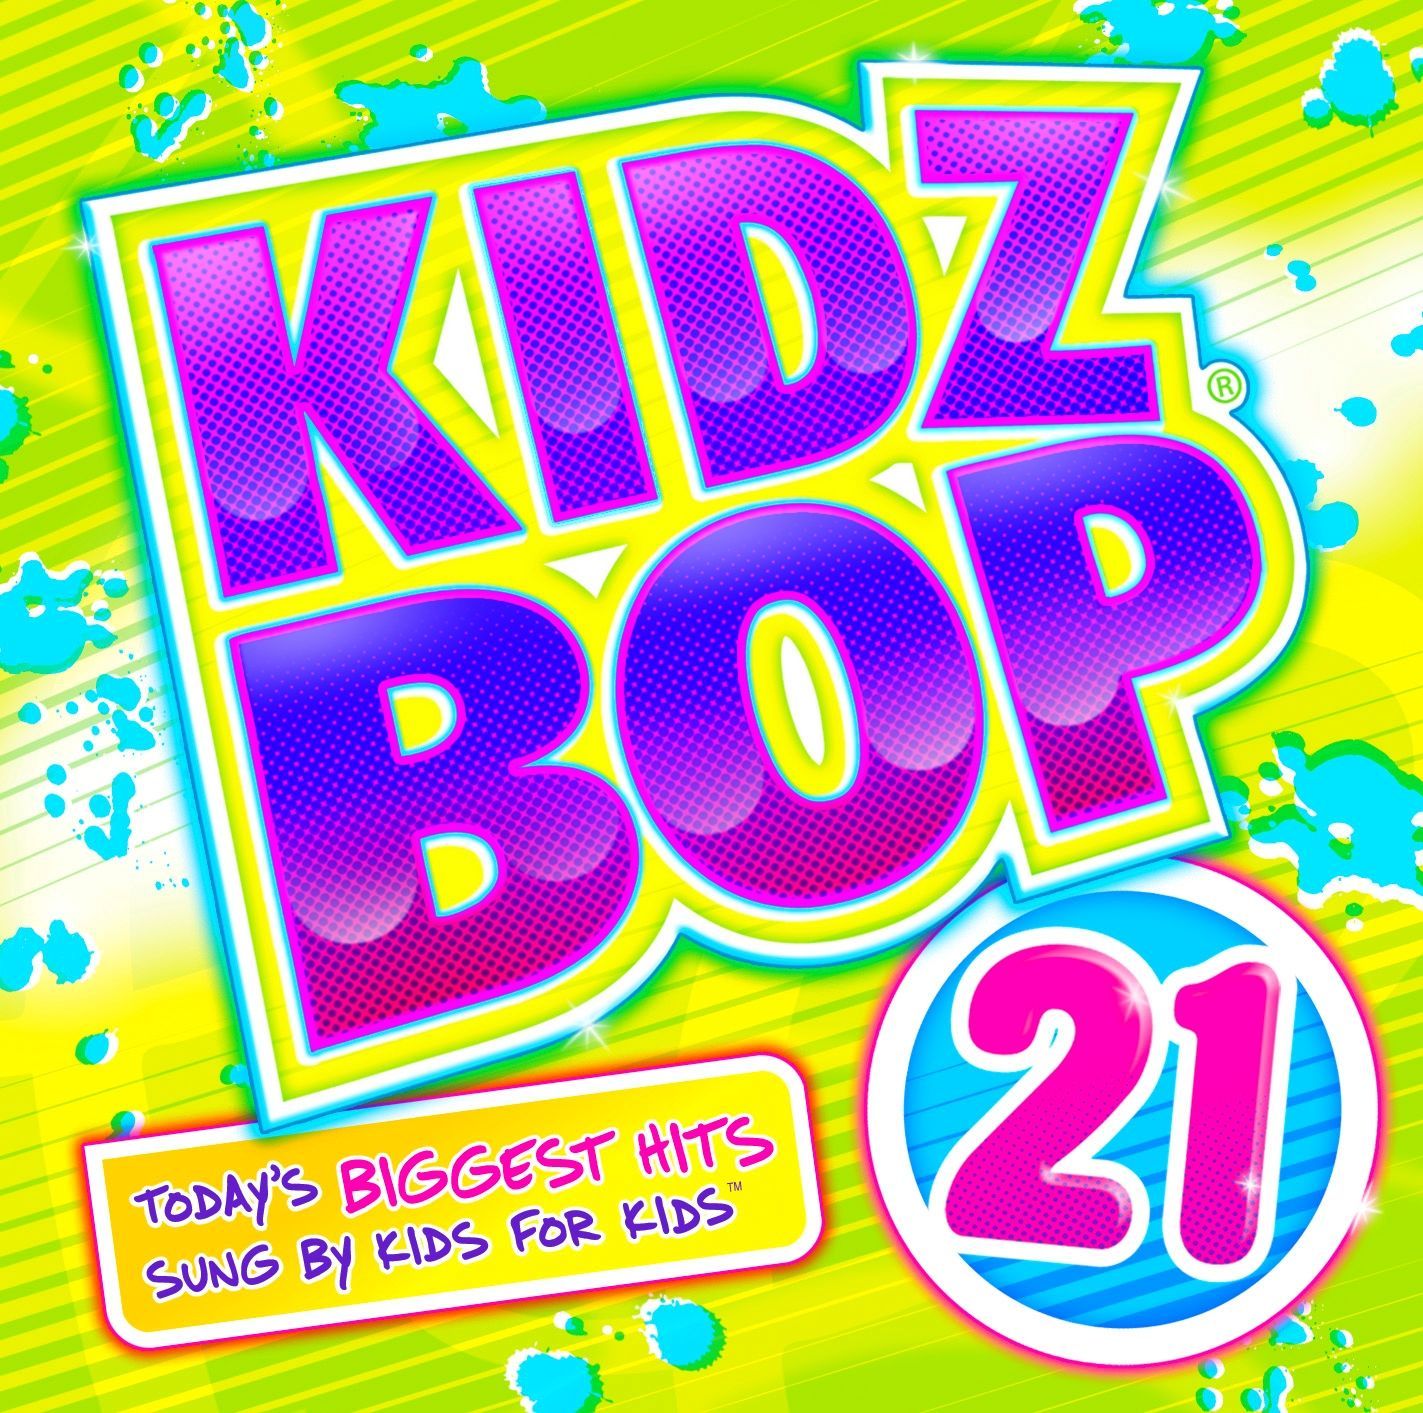 Kidz Bop 21 Bop Kids foto